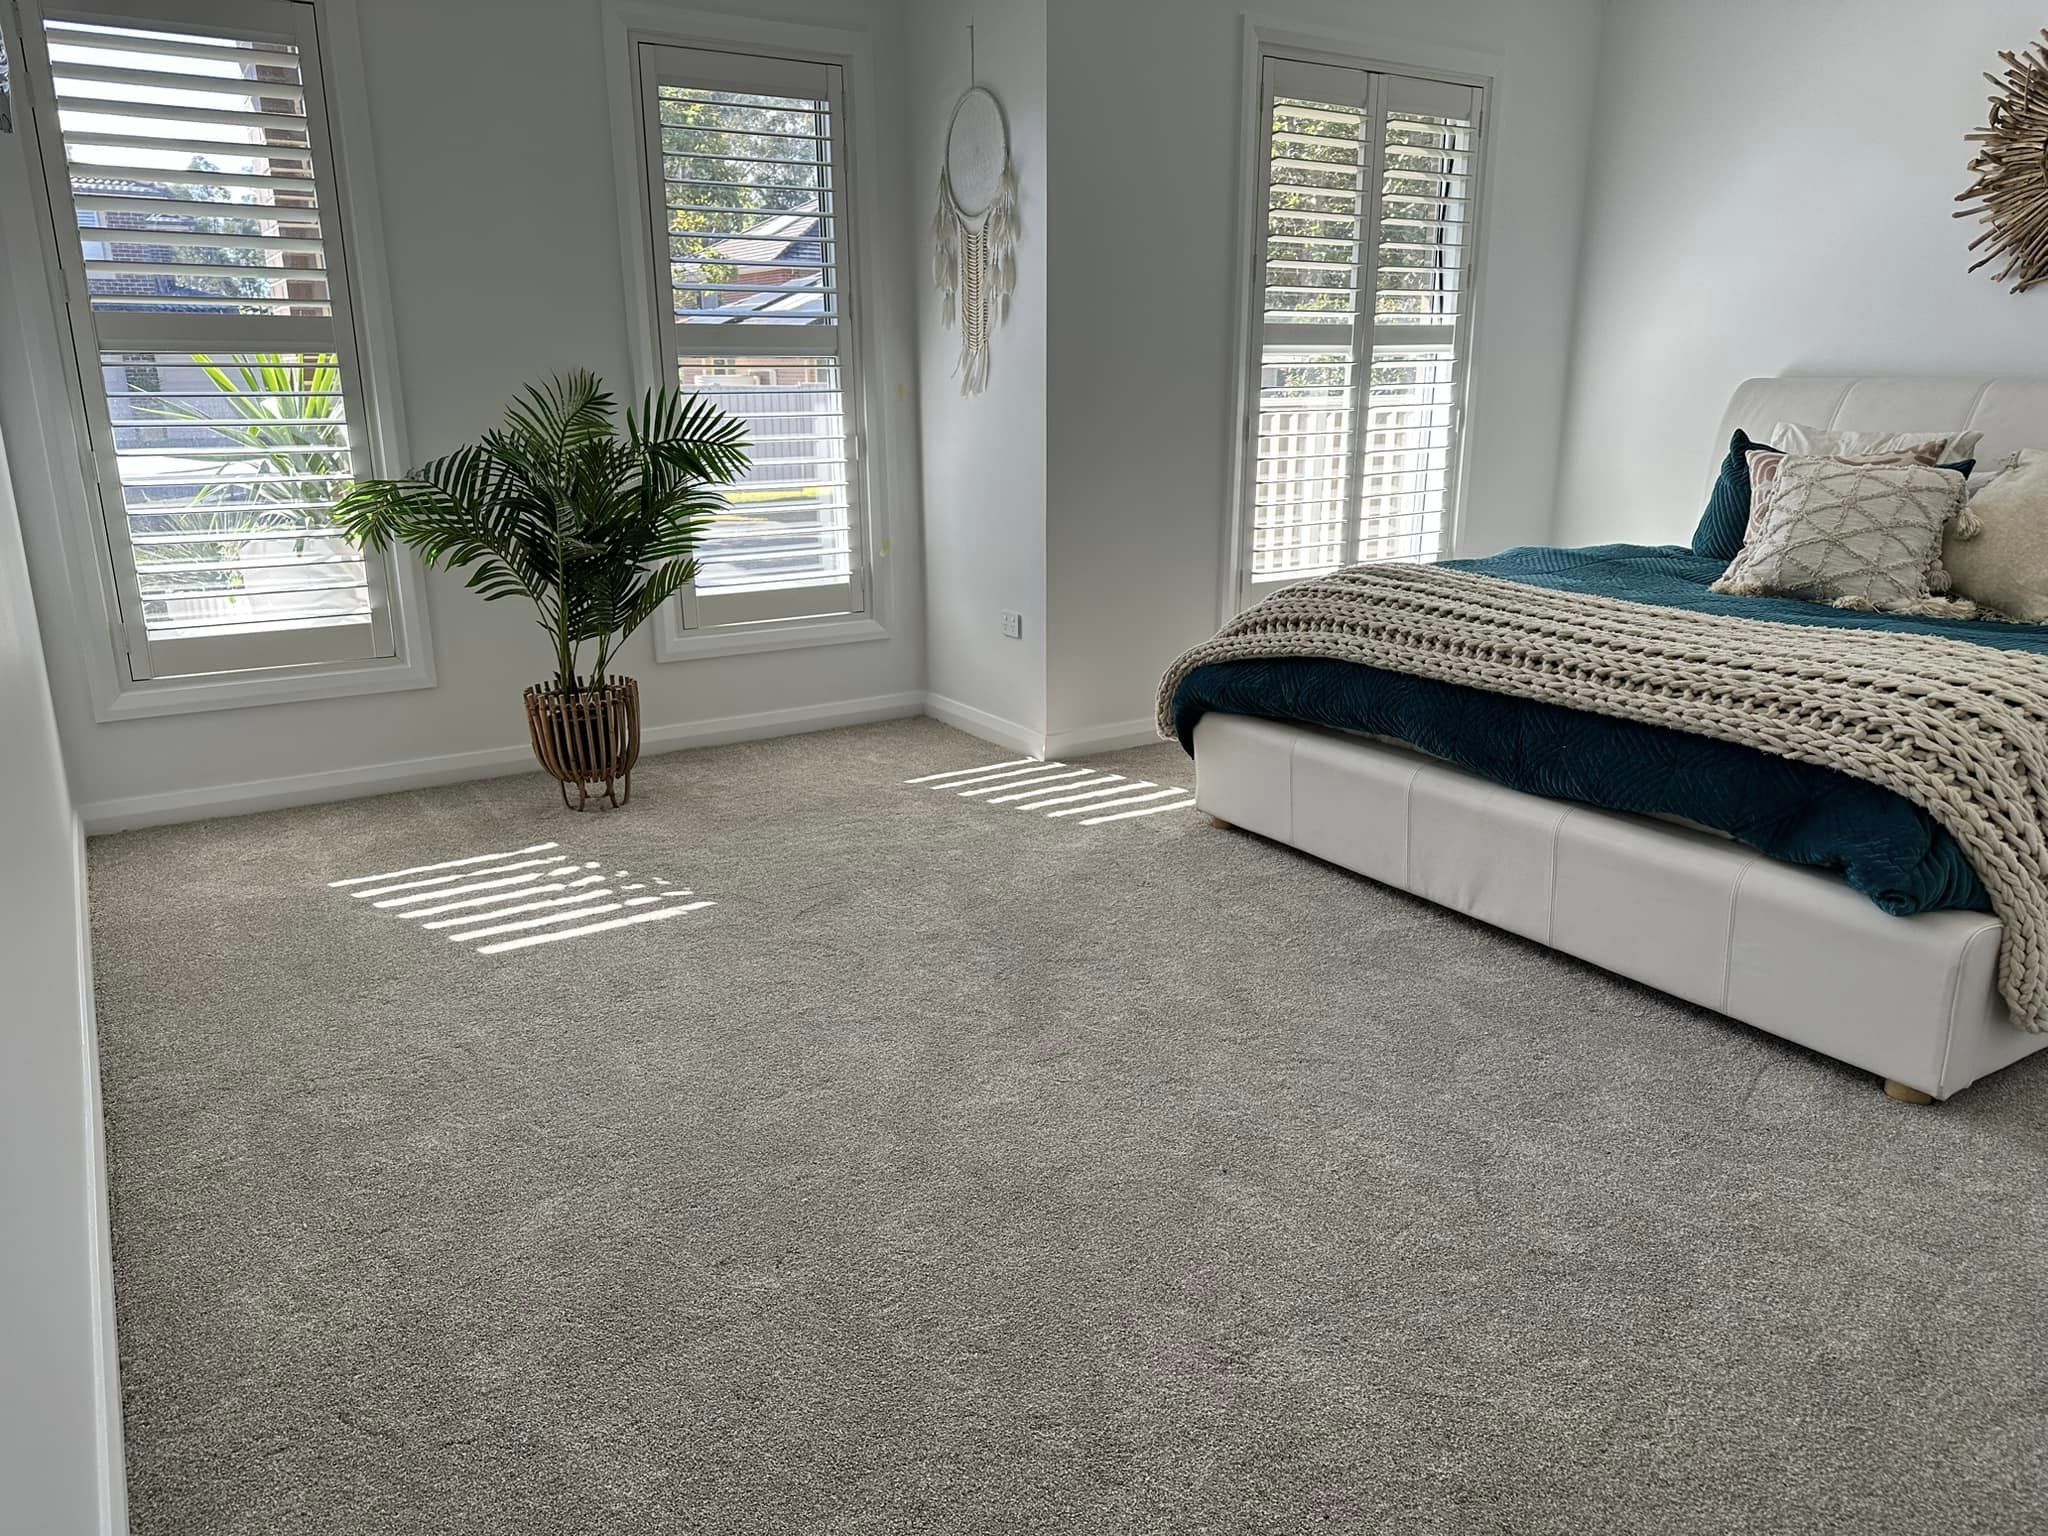 Plush Carpet supply & installation